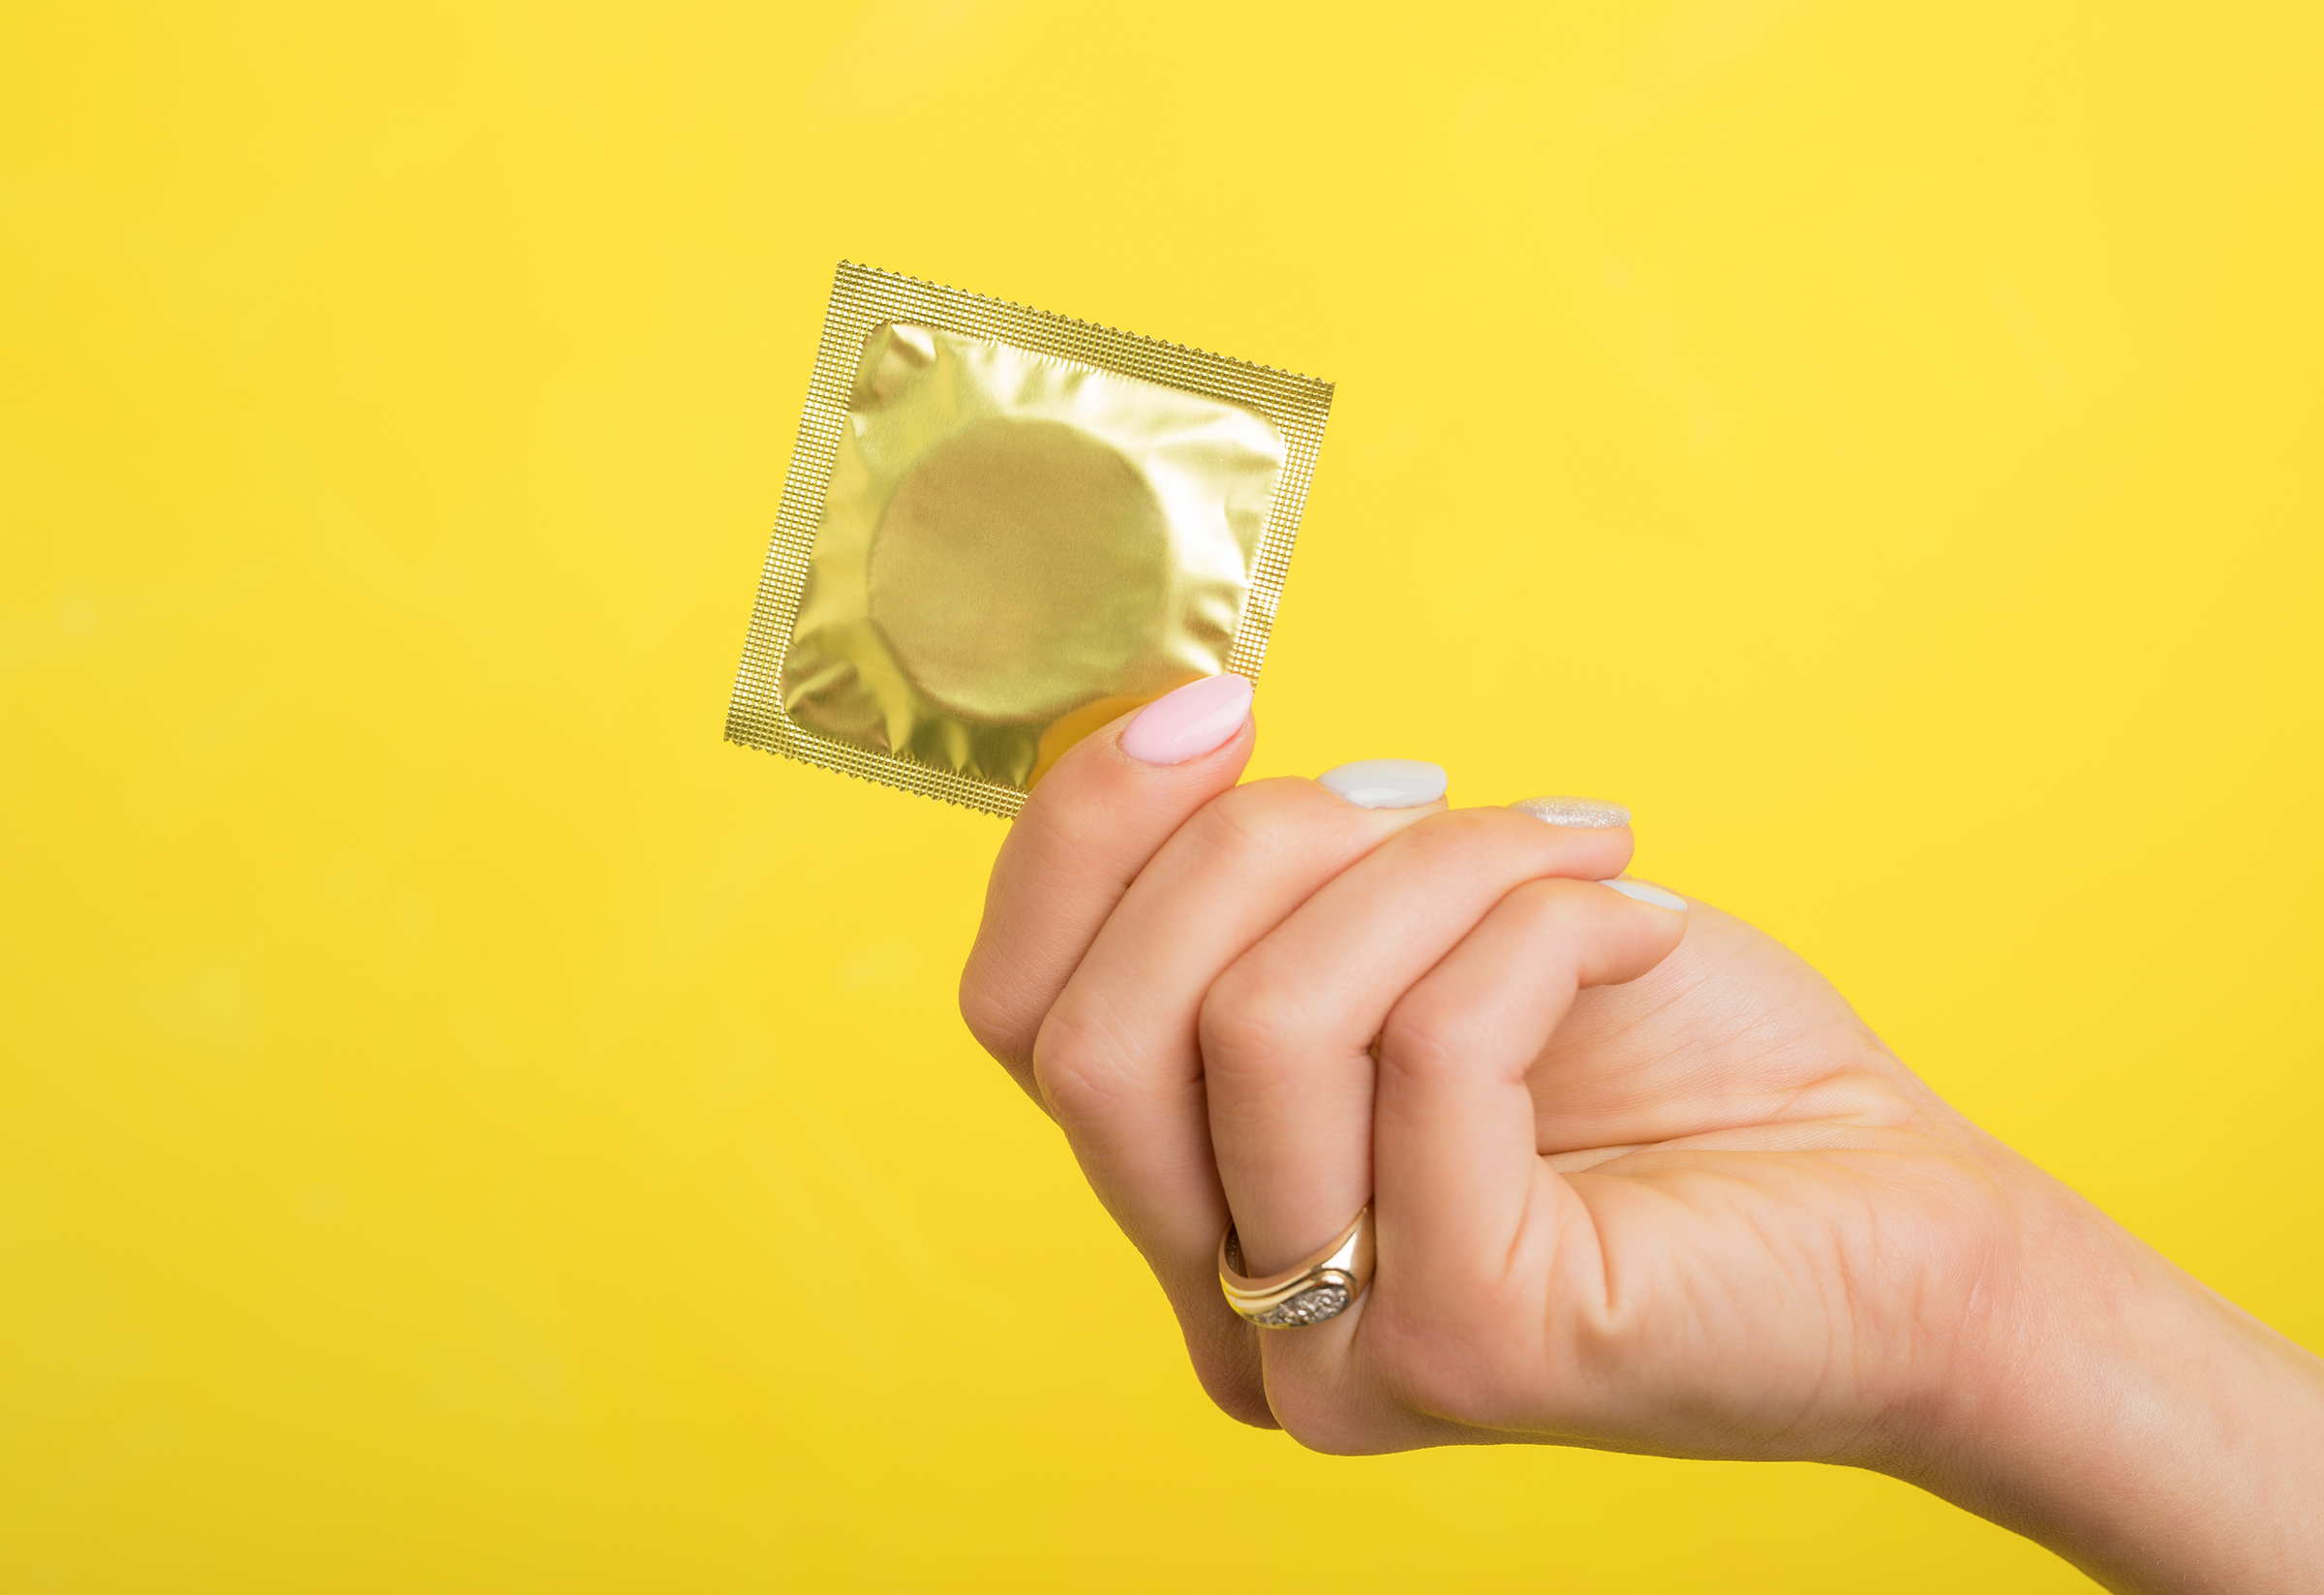 Condom Broke Chance Of Pregnancy